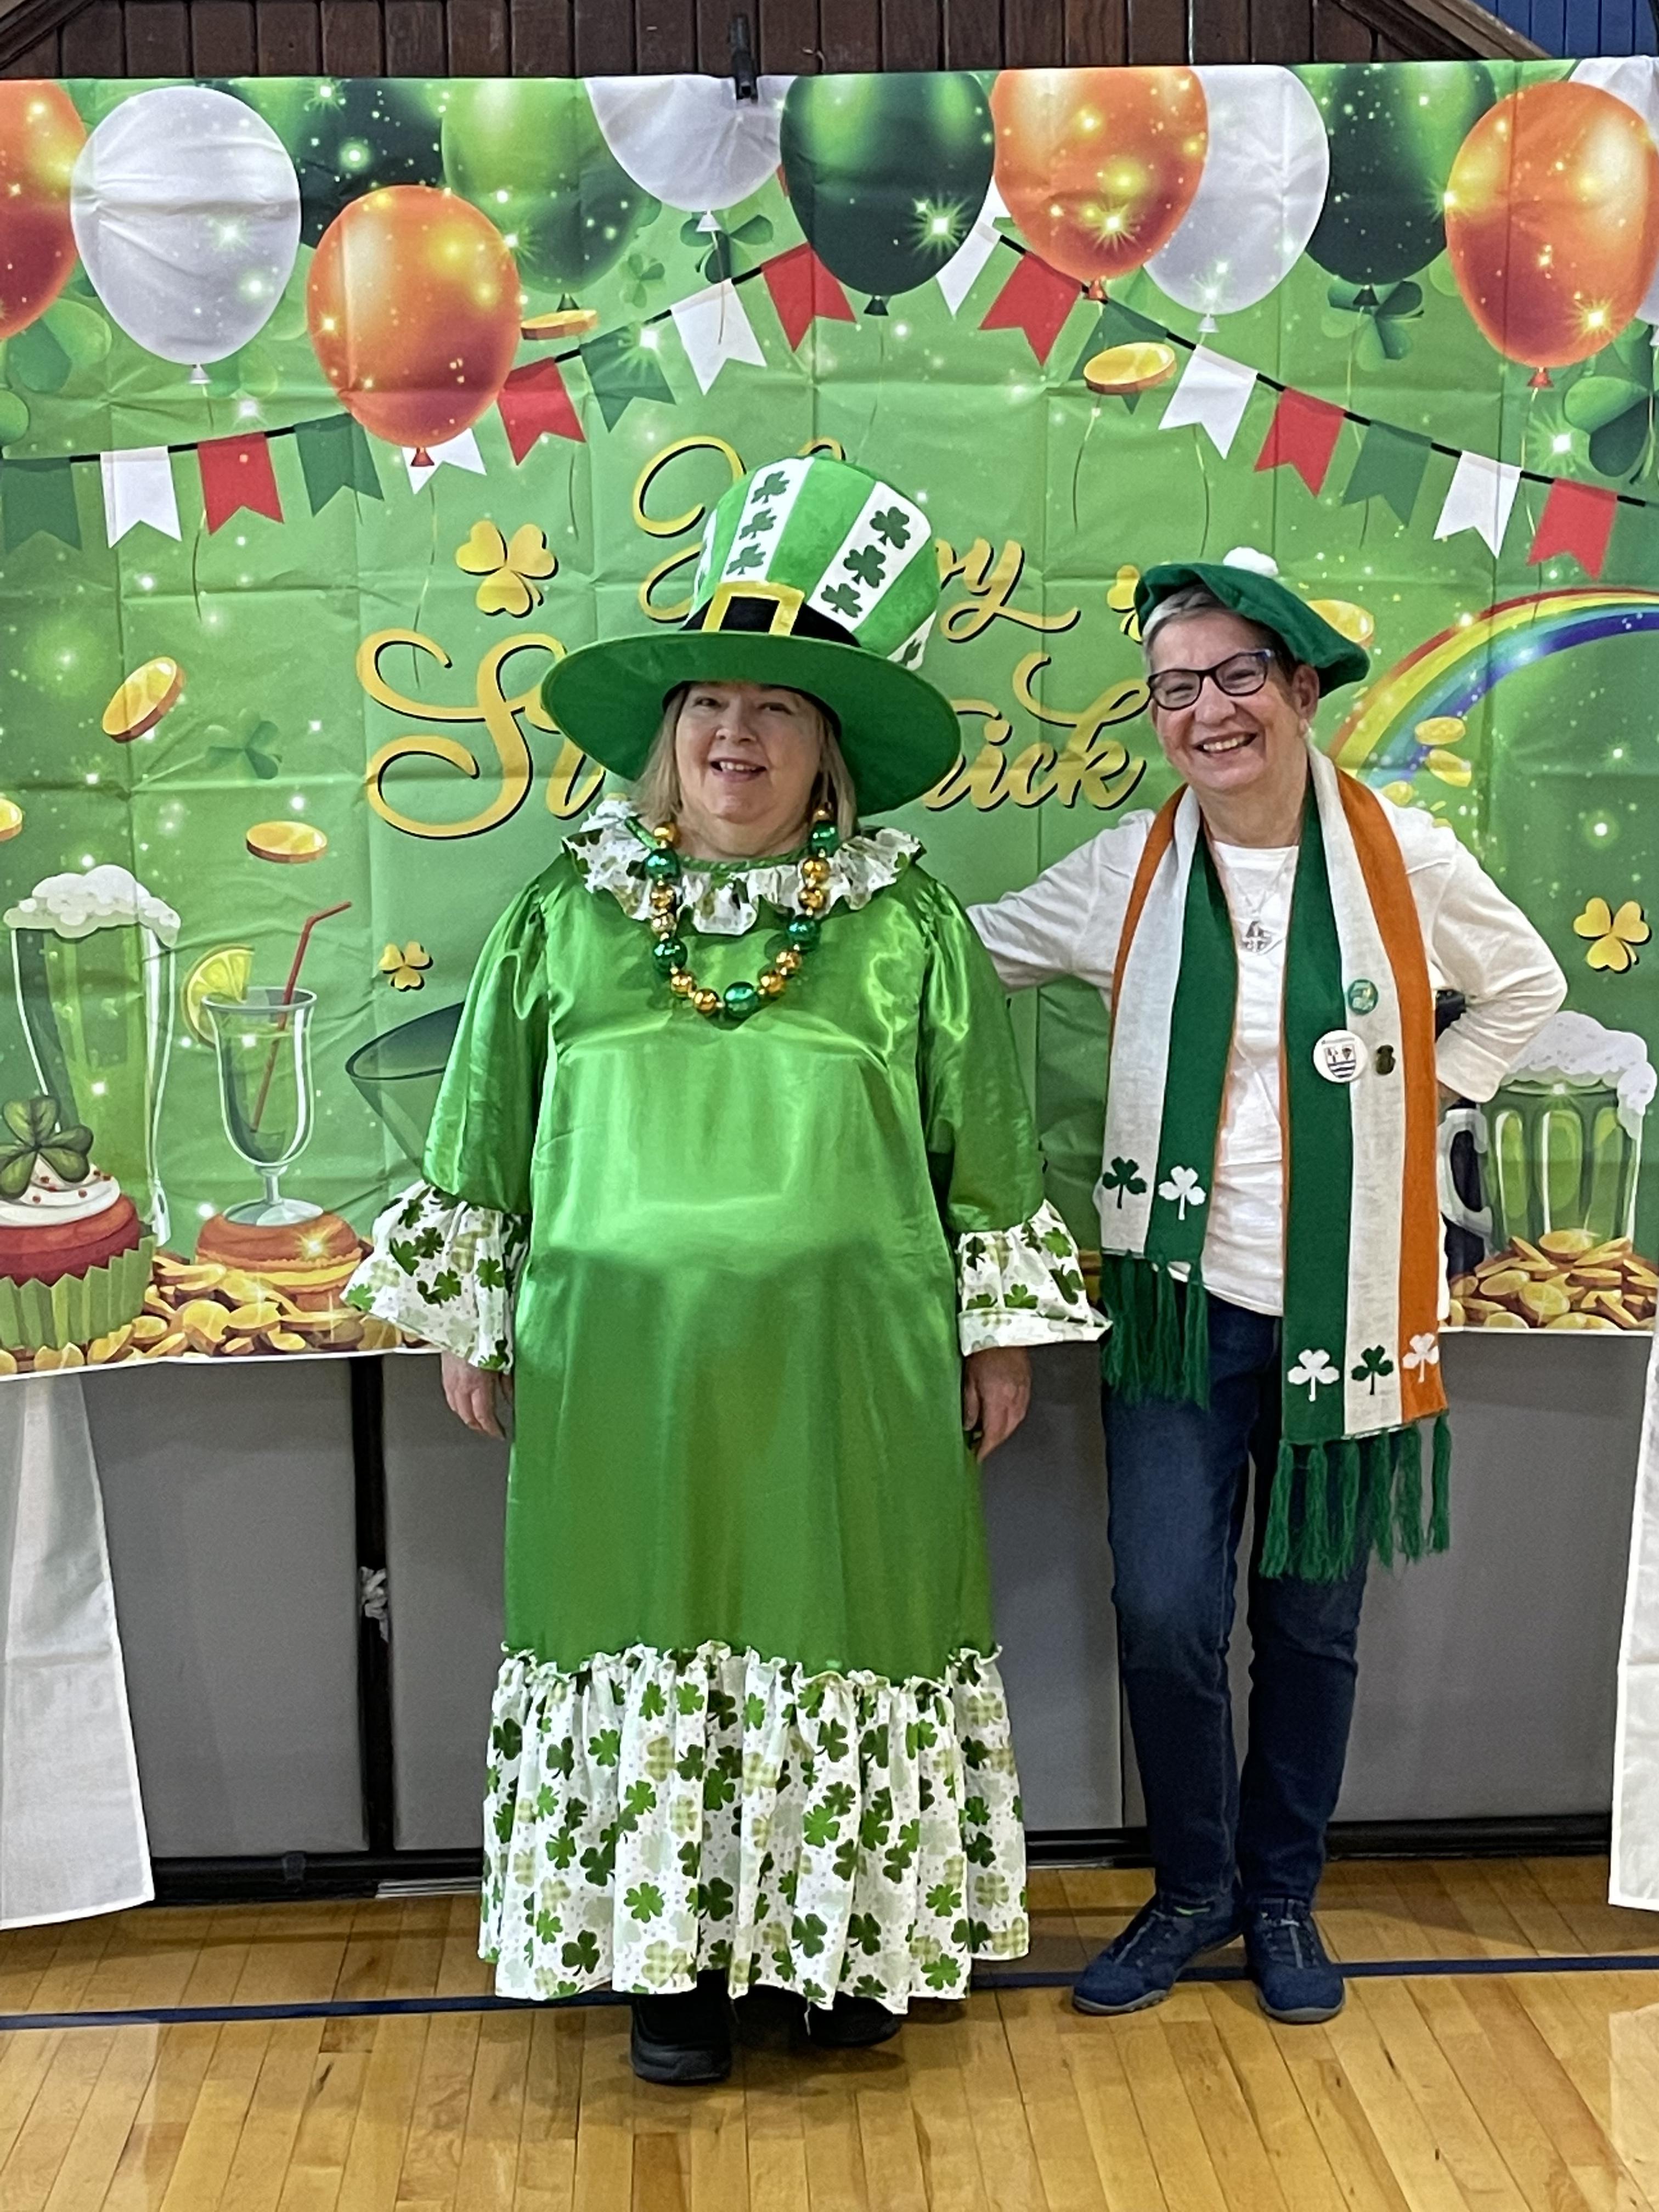 Celebrating Saint Patrick's Day at the Washington School